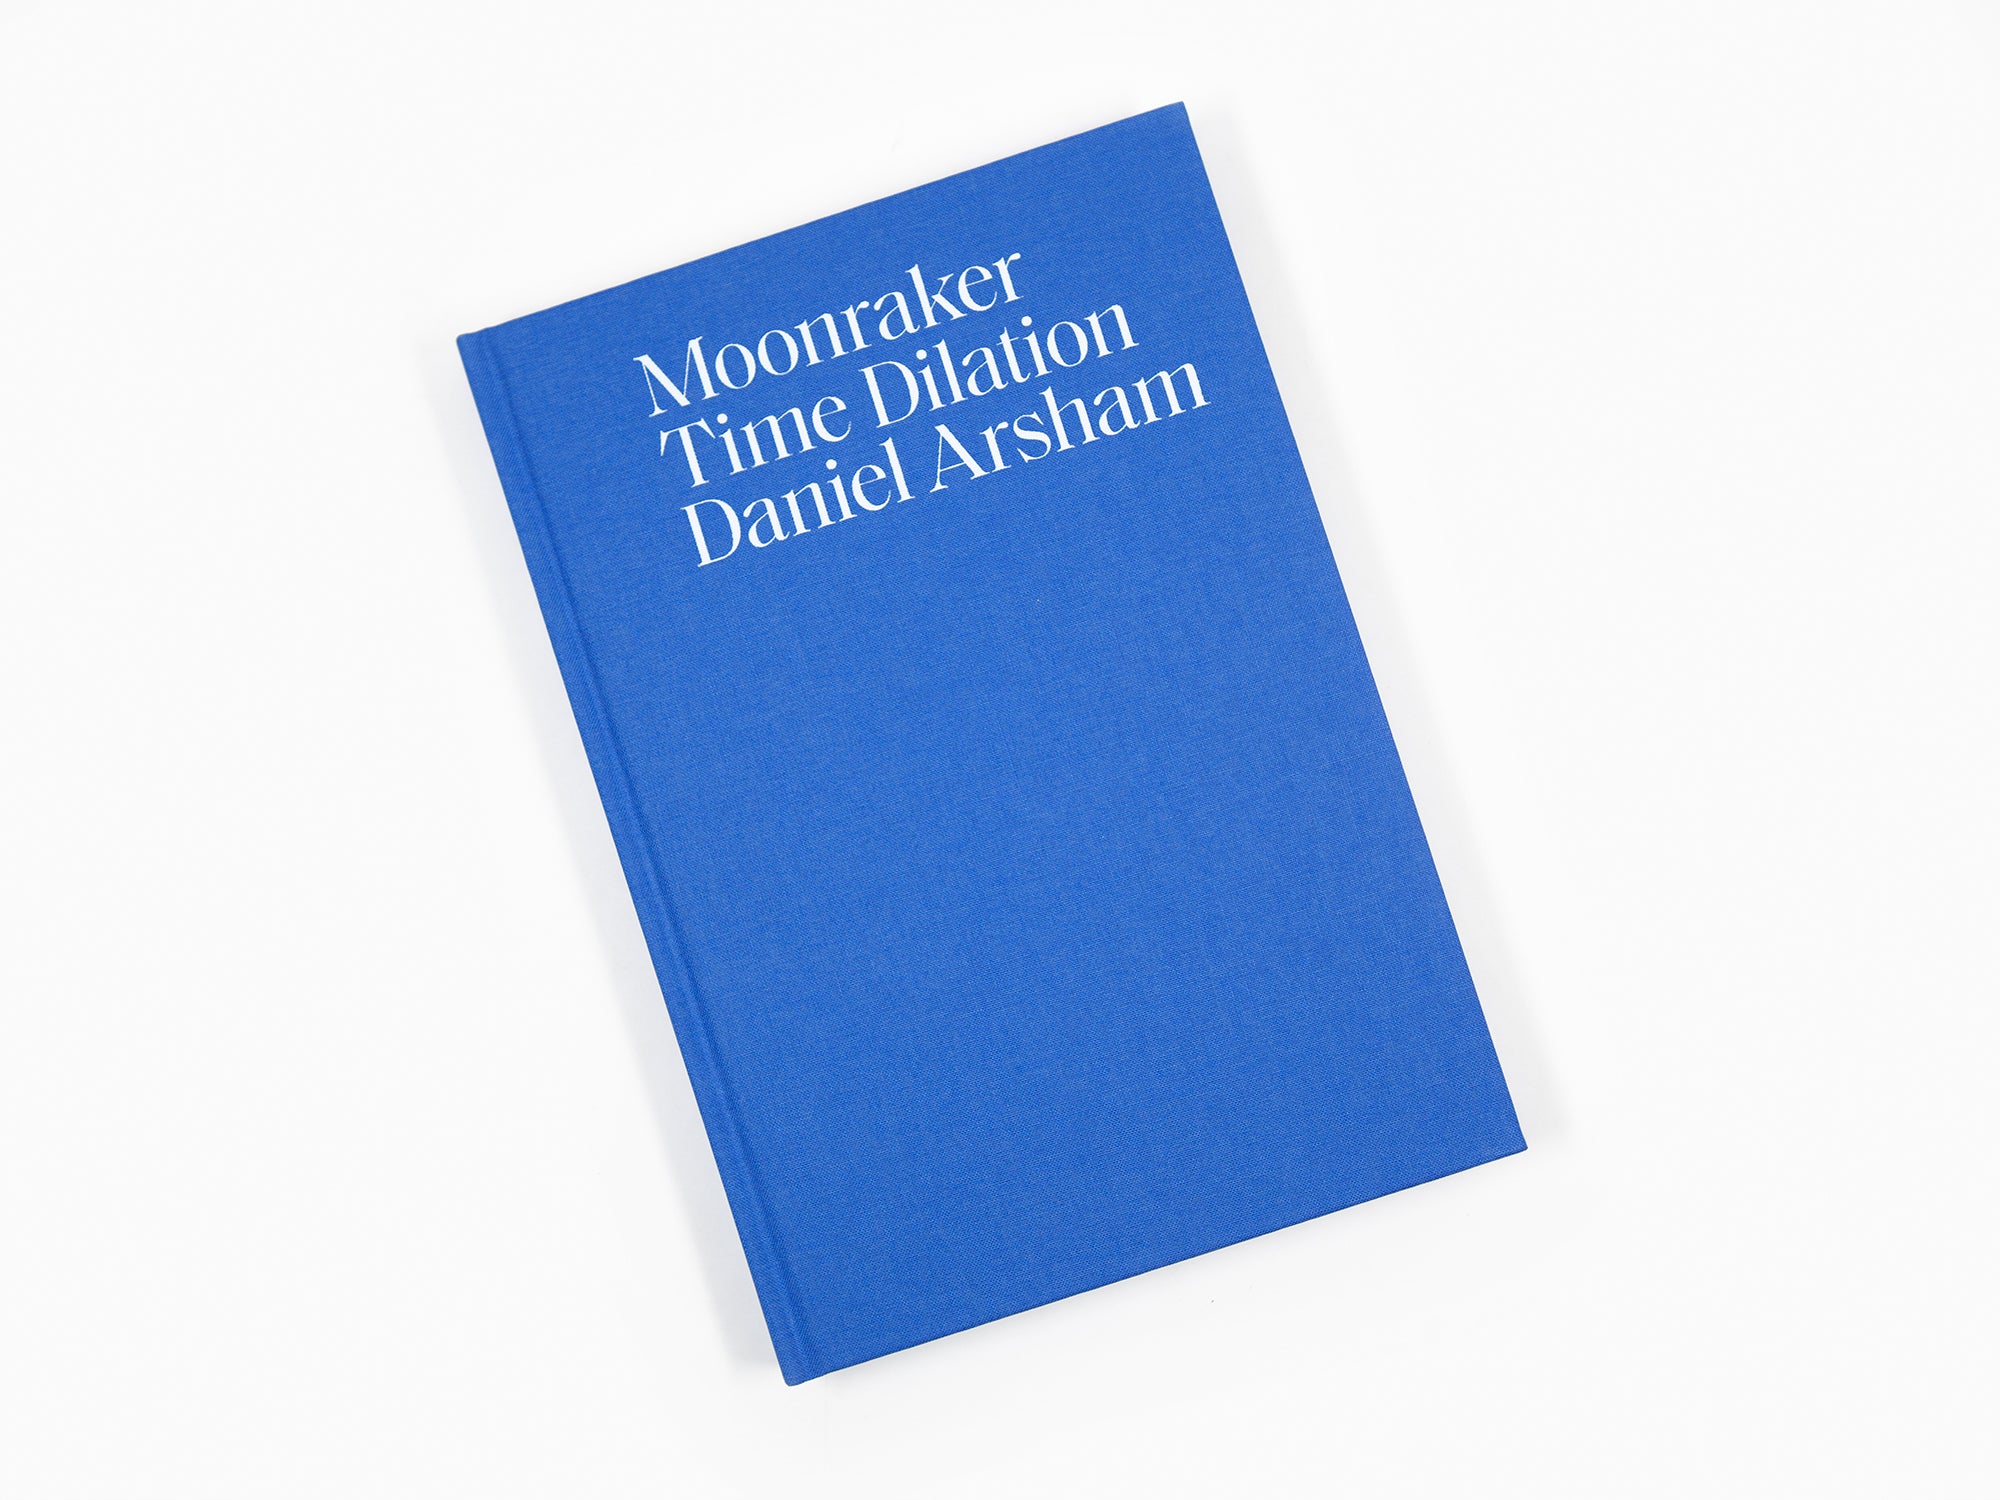 Daniel Arsham - Moonraker Time Dilation